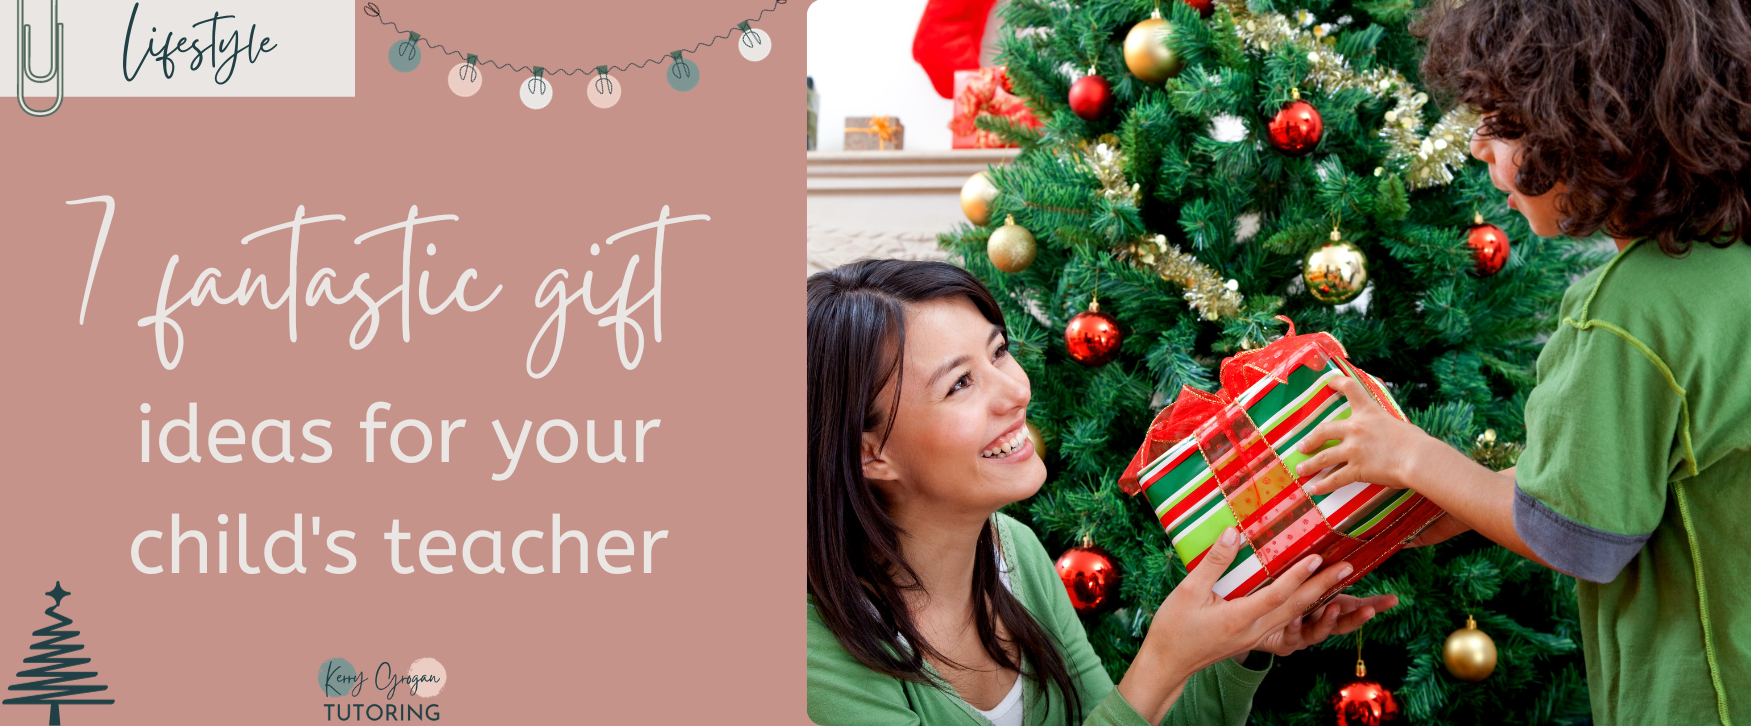 7 fantastic gift for a teacher ideas for your child's teacher